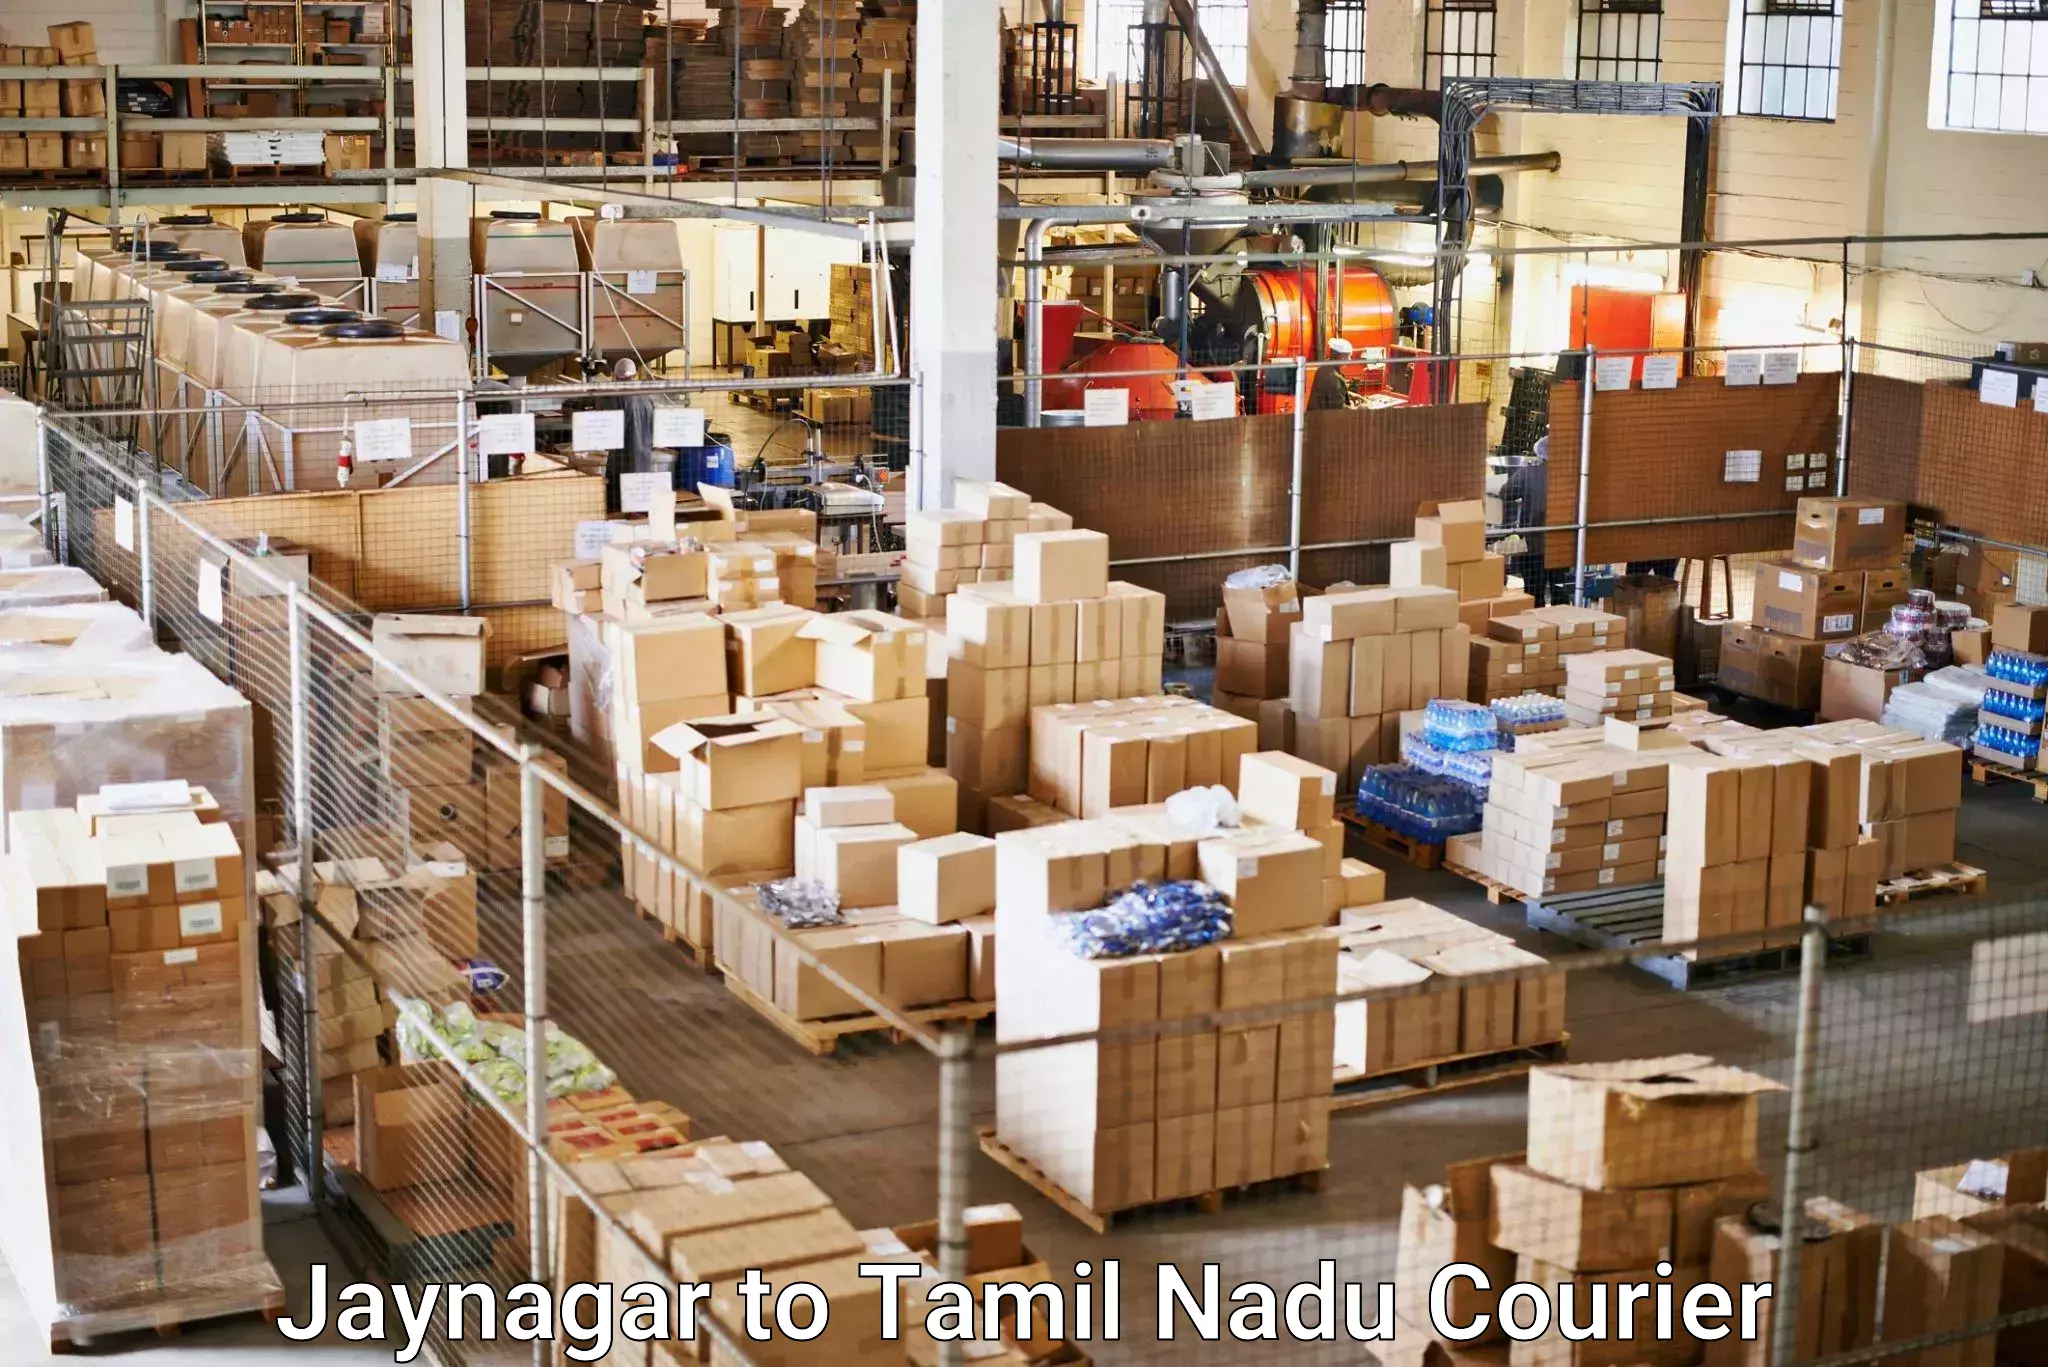 Courier service partnerships Jaynagar to Rameswaram